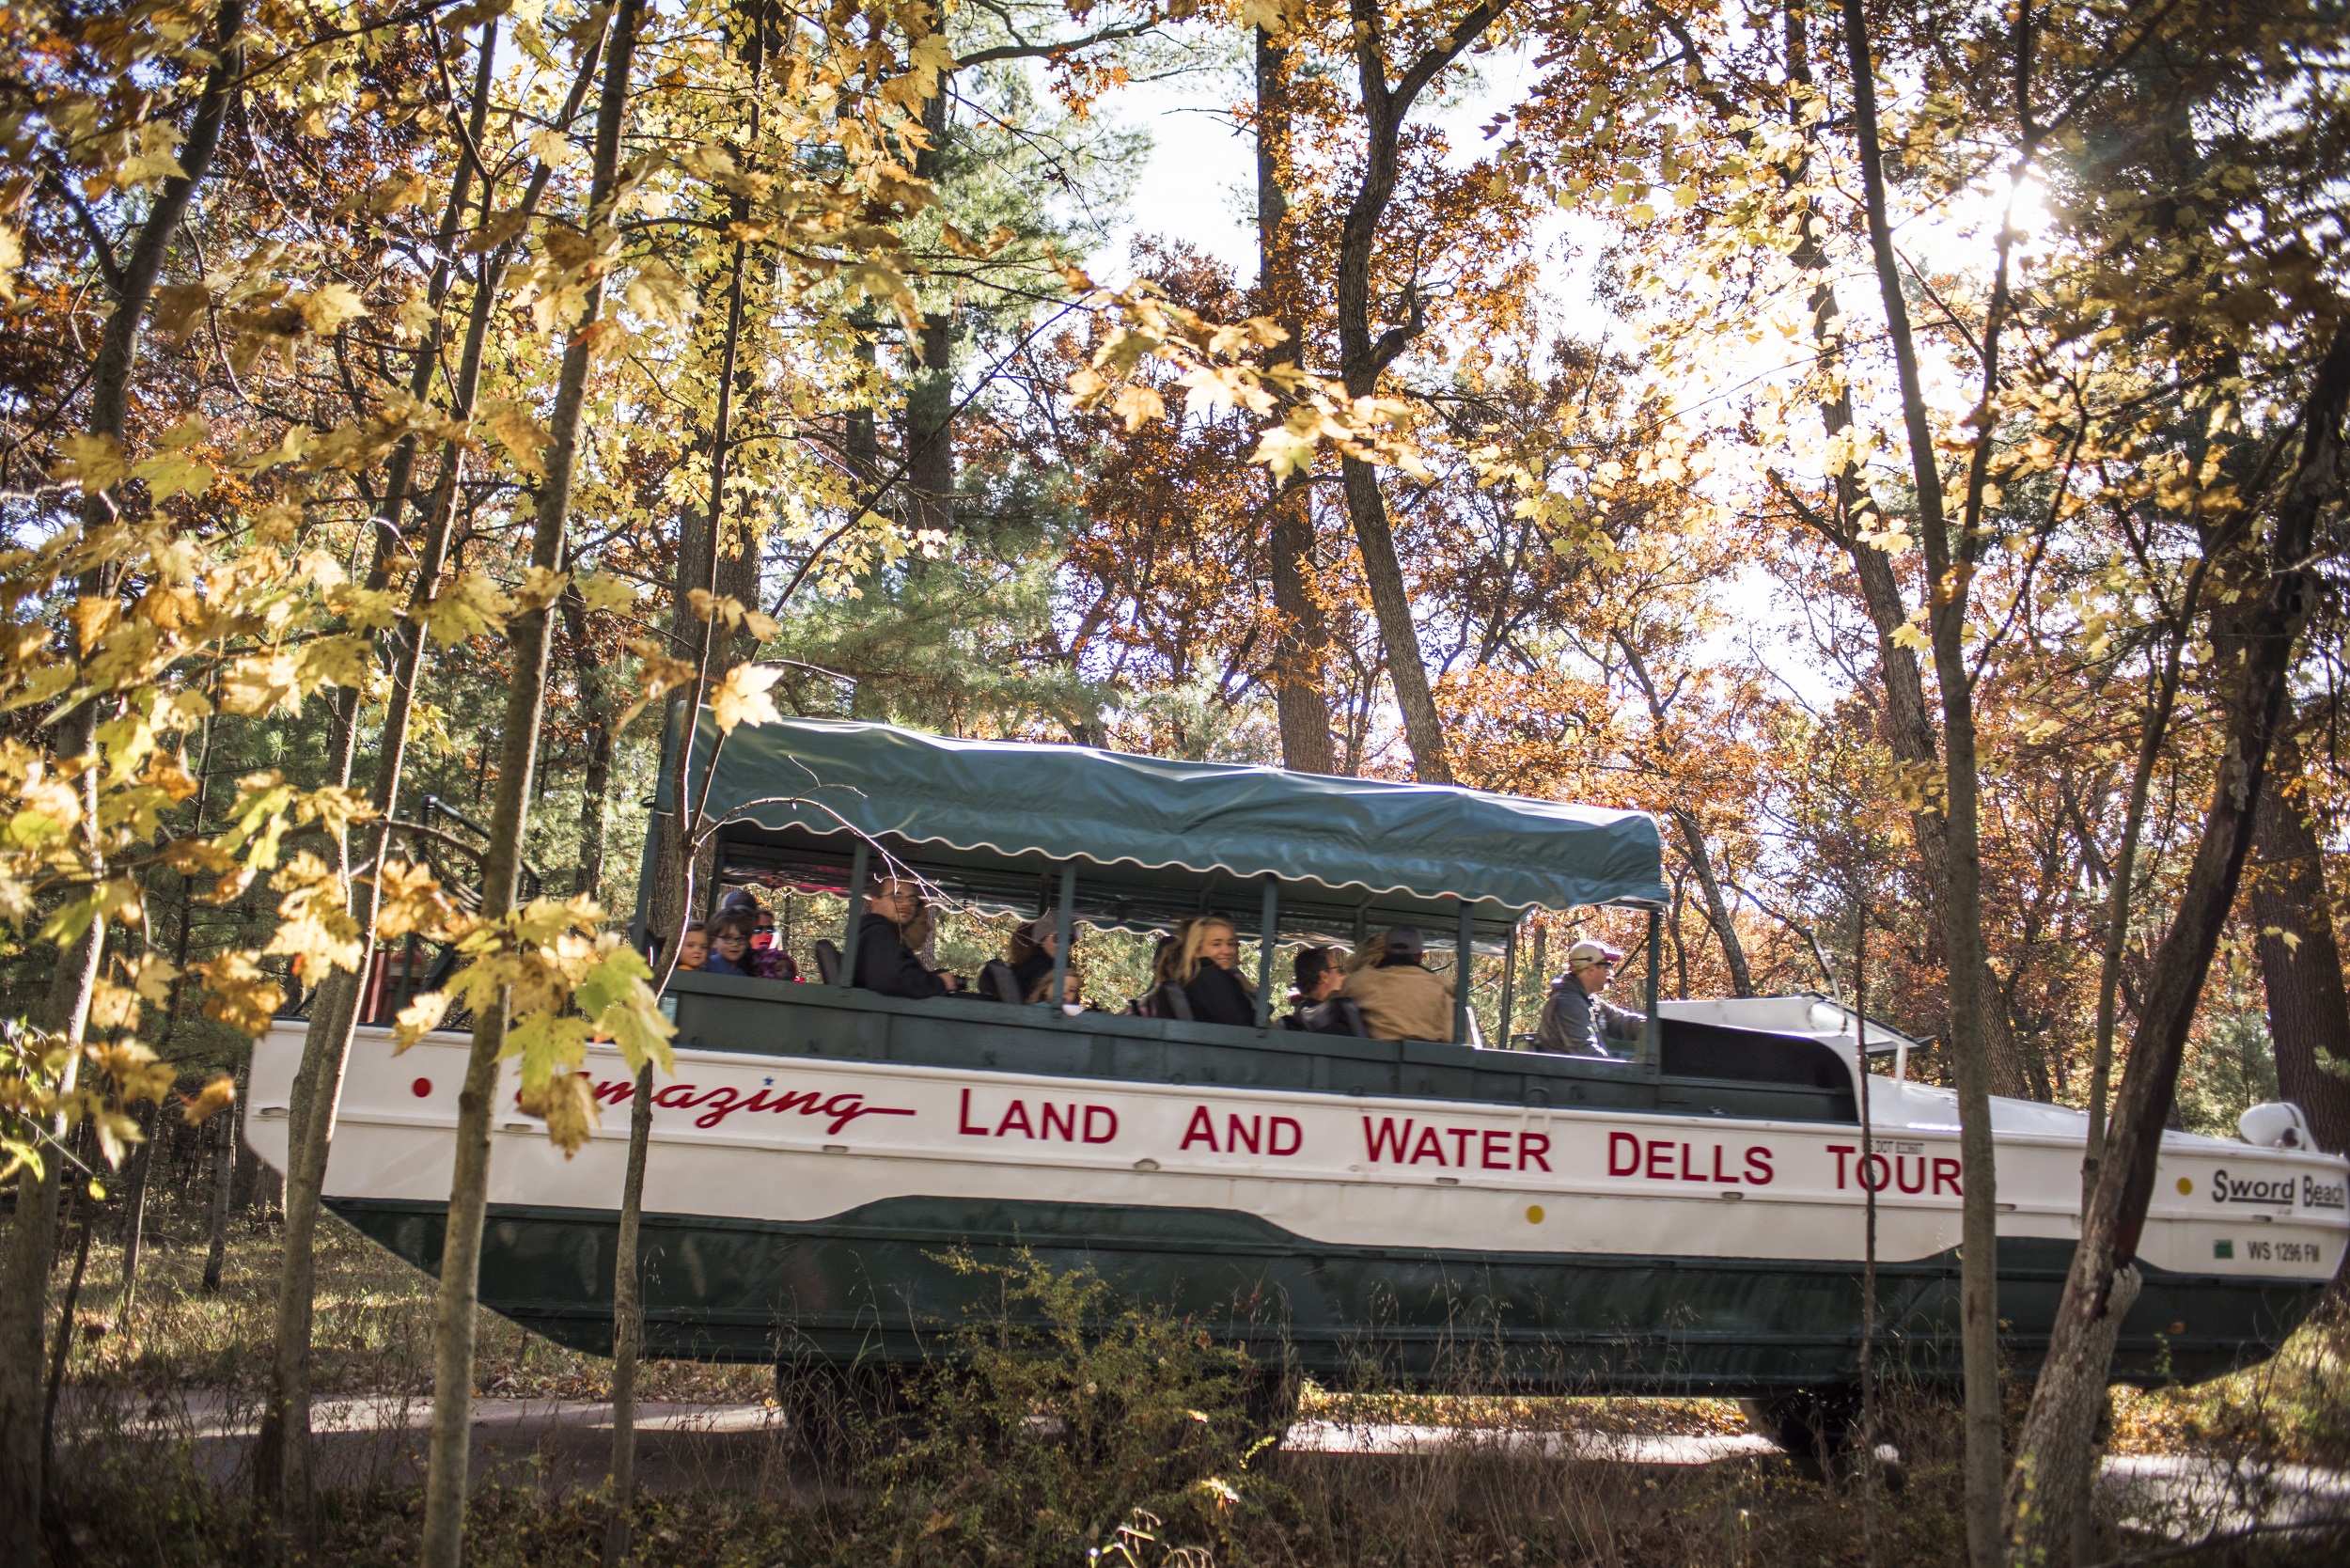 Original Wisconsin Ducks tours take passengers through the beautiful fall foliage before splashing down into the water.